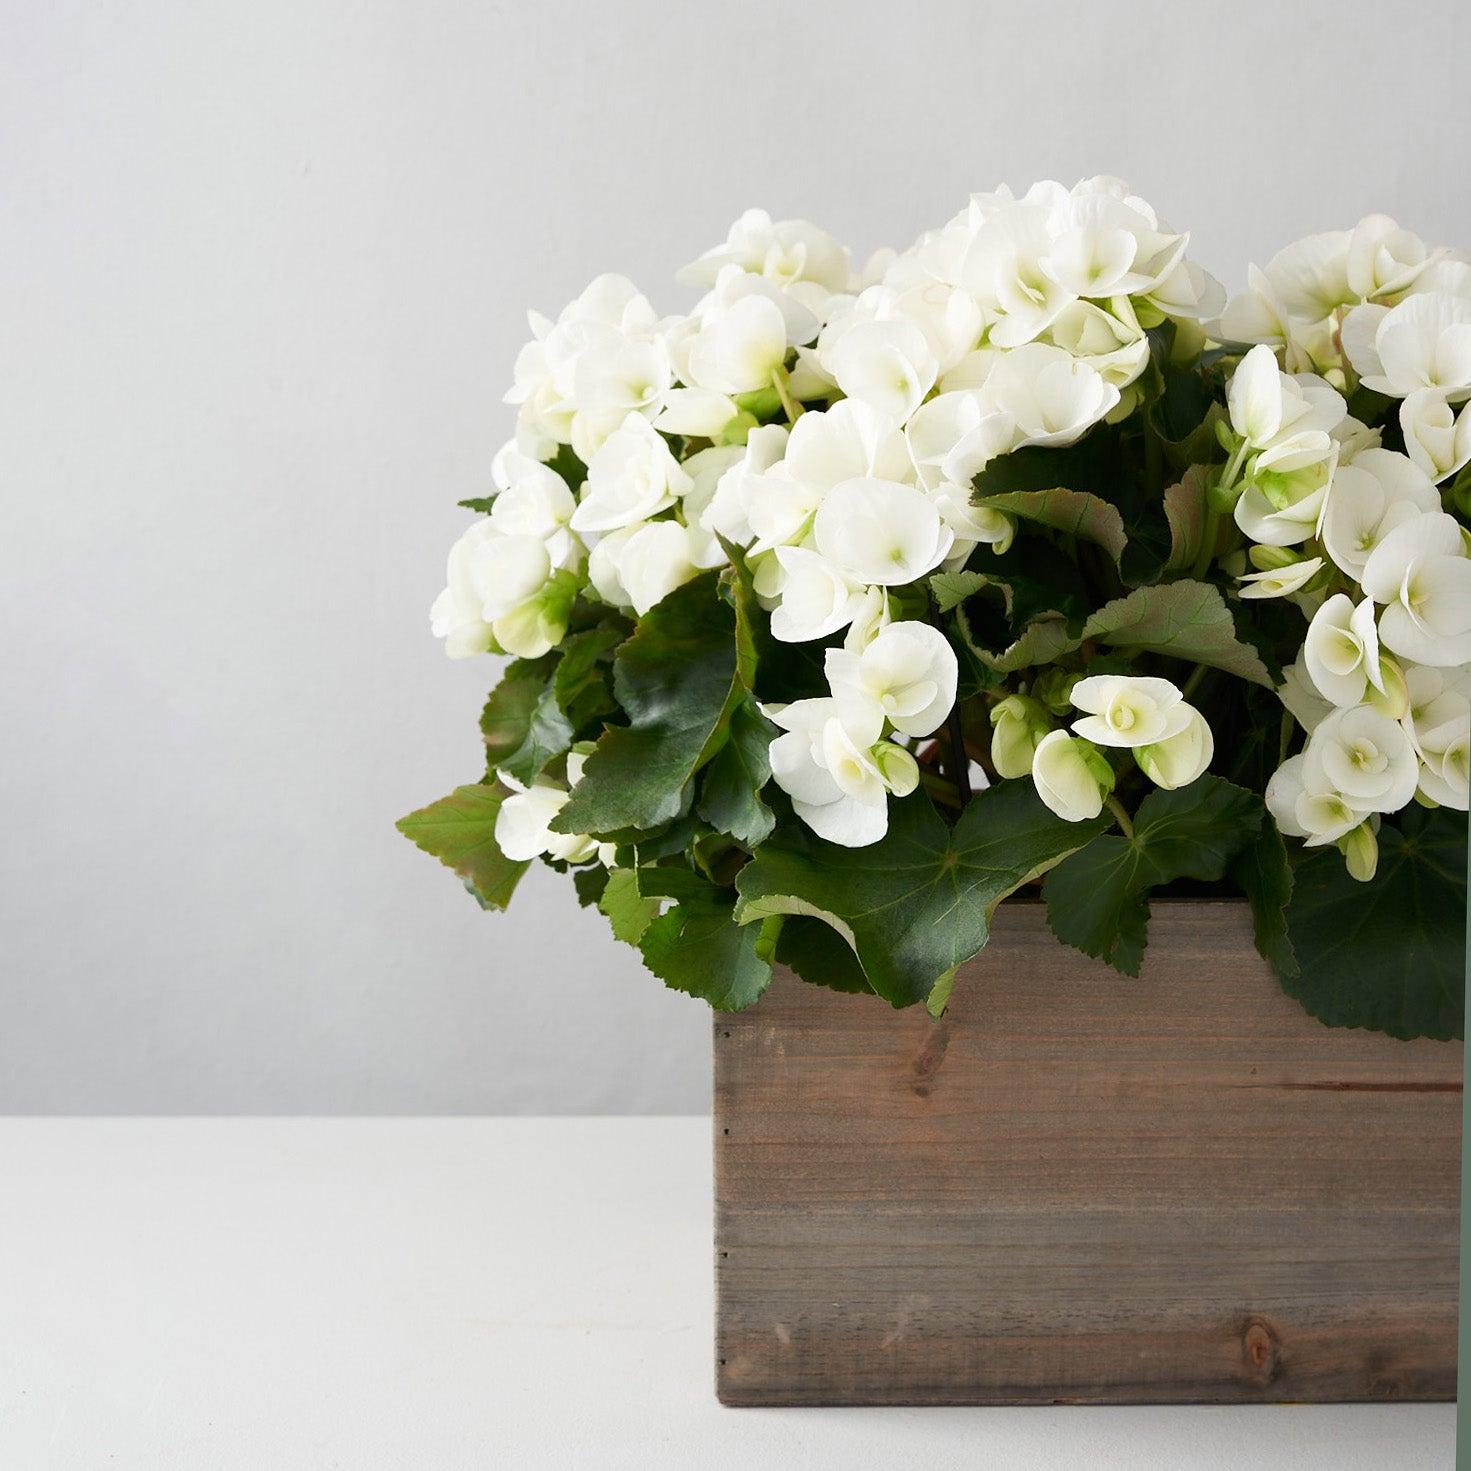 White Begonia in Wooden Box